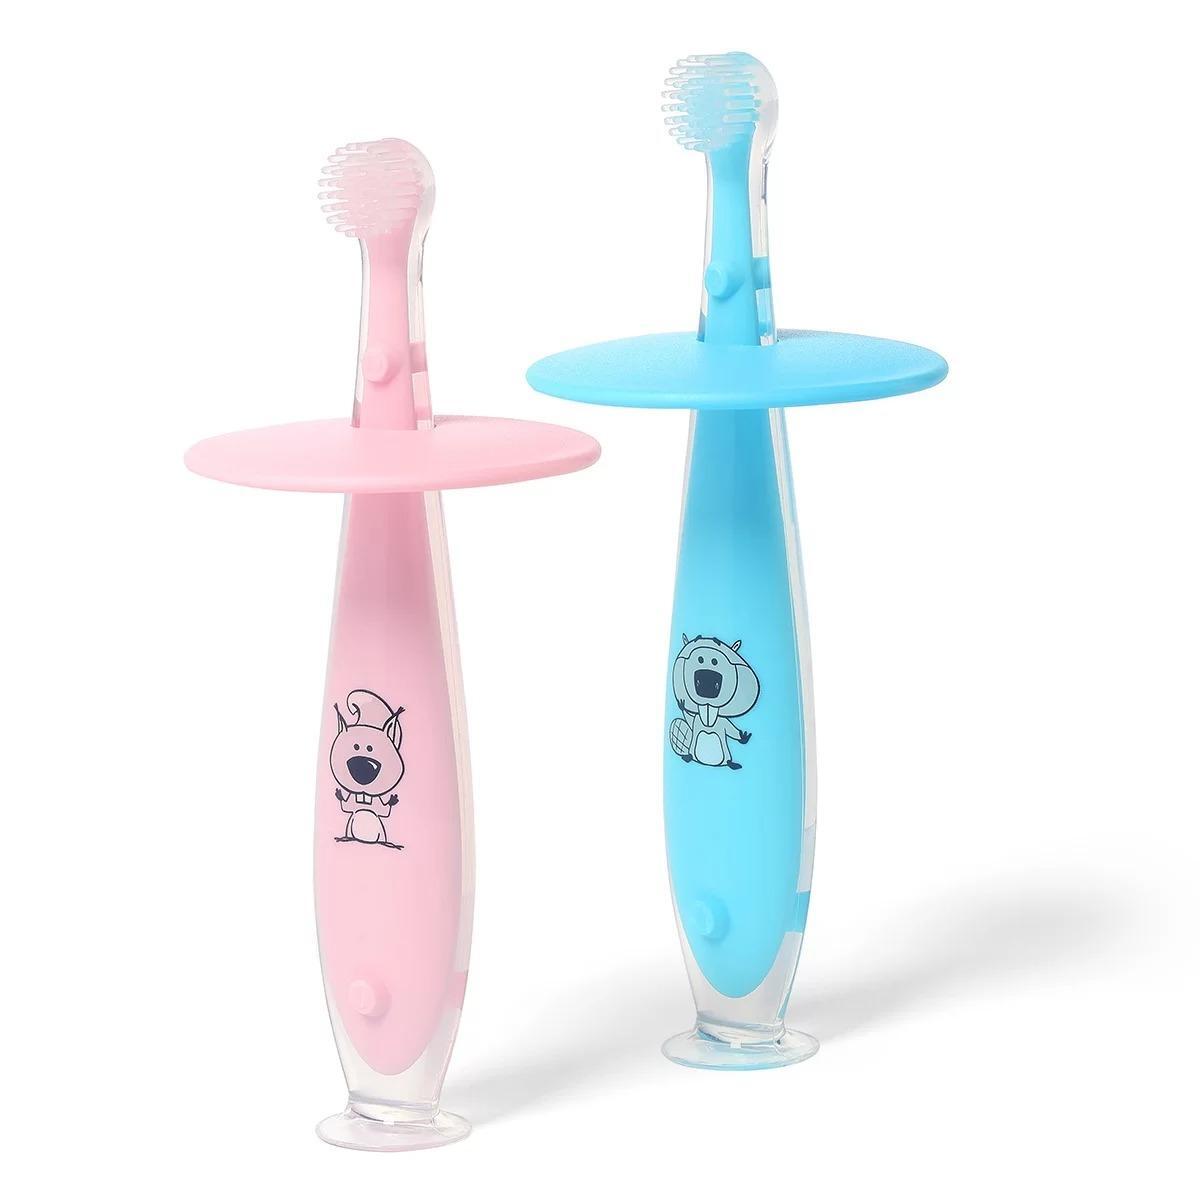 BabyOno Suction baby toothbrush 6m+, Pink/Blue - BabyOno